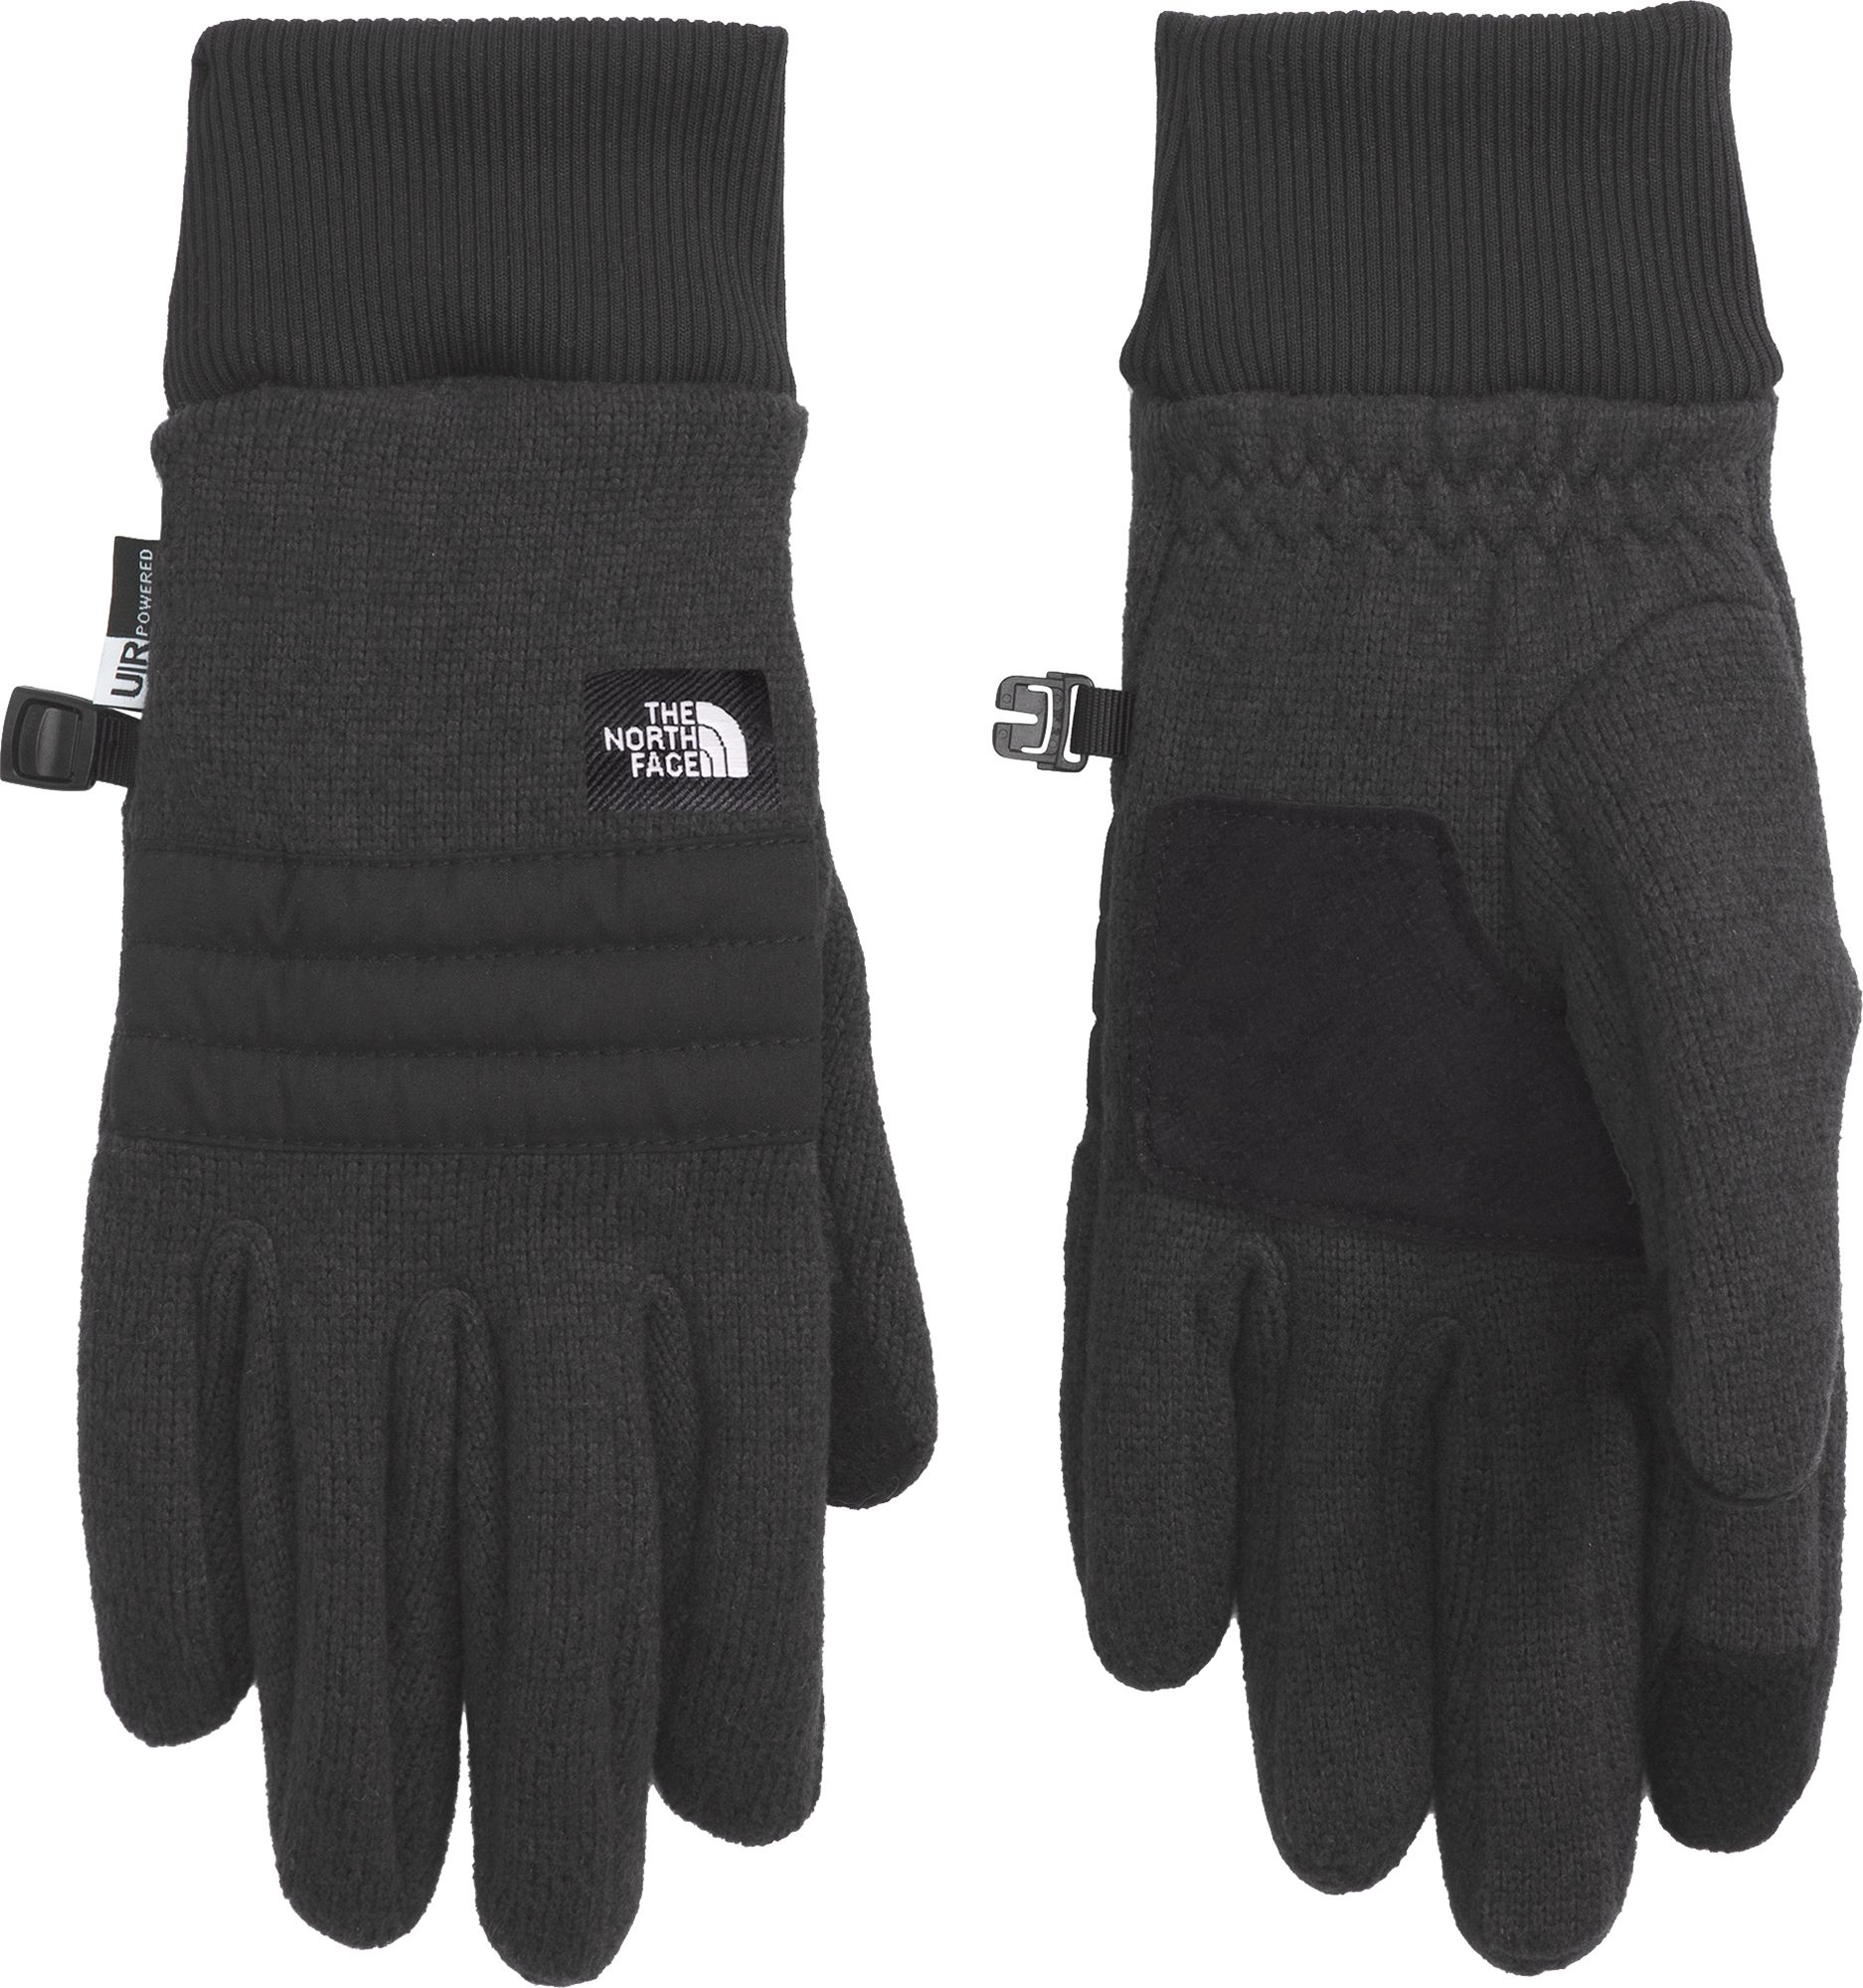 The North Face Mens Gordon Etip Glove